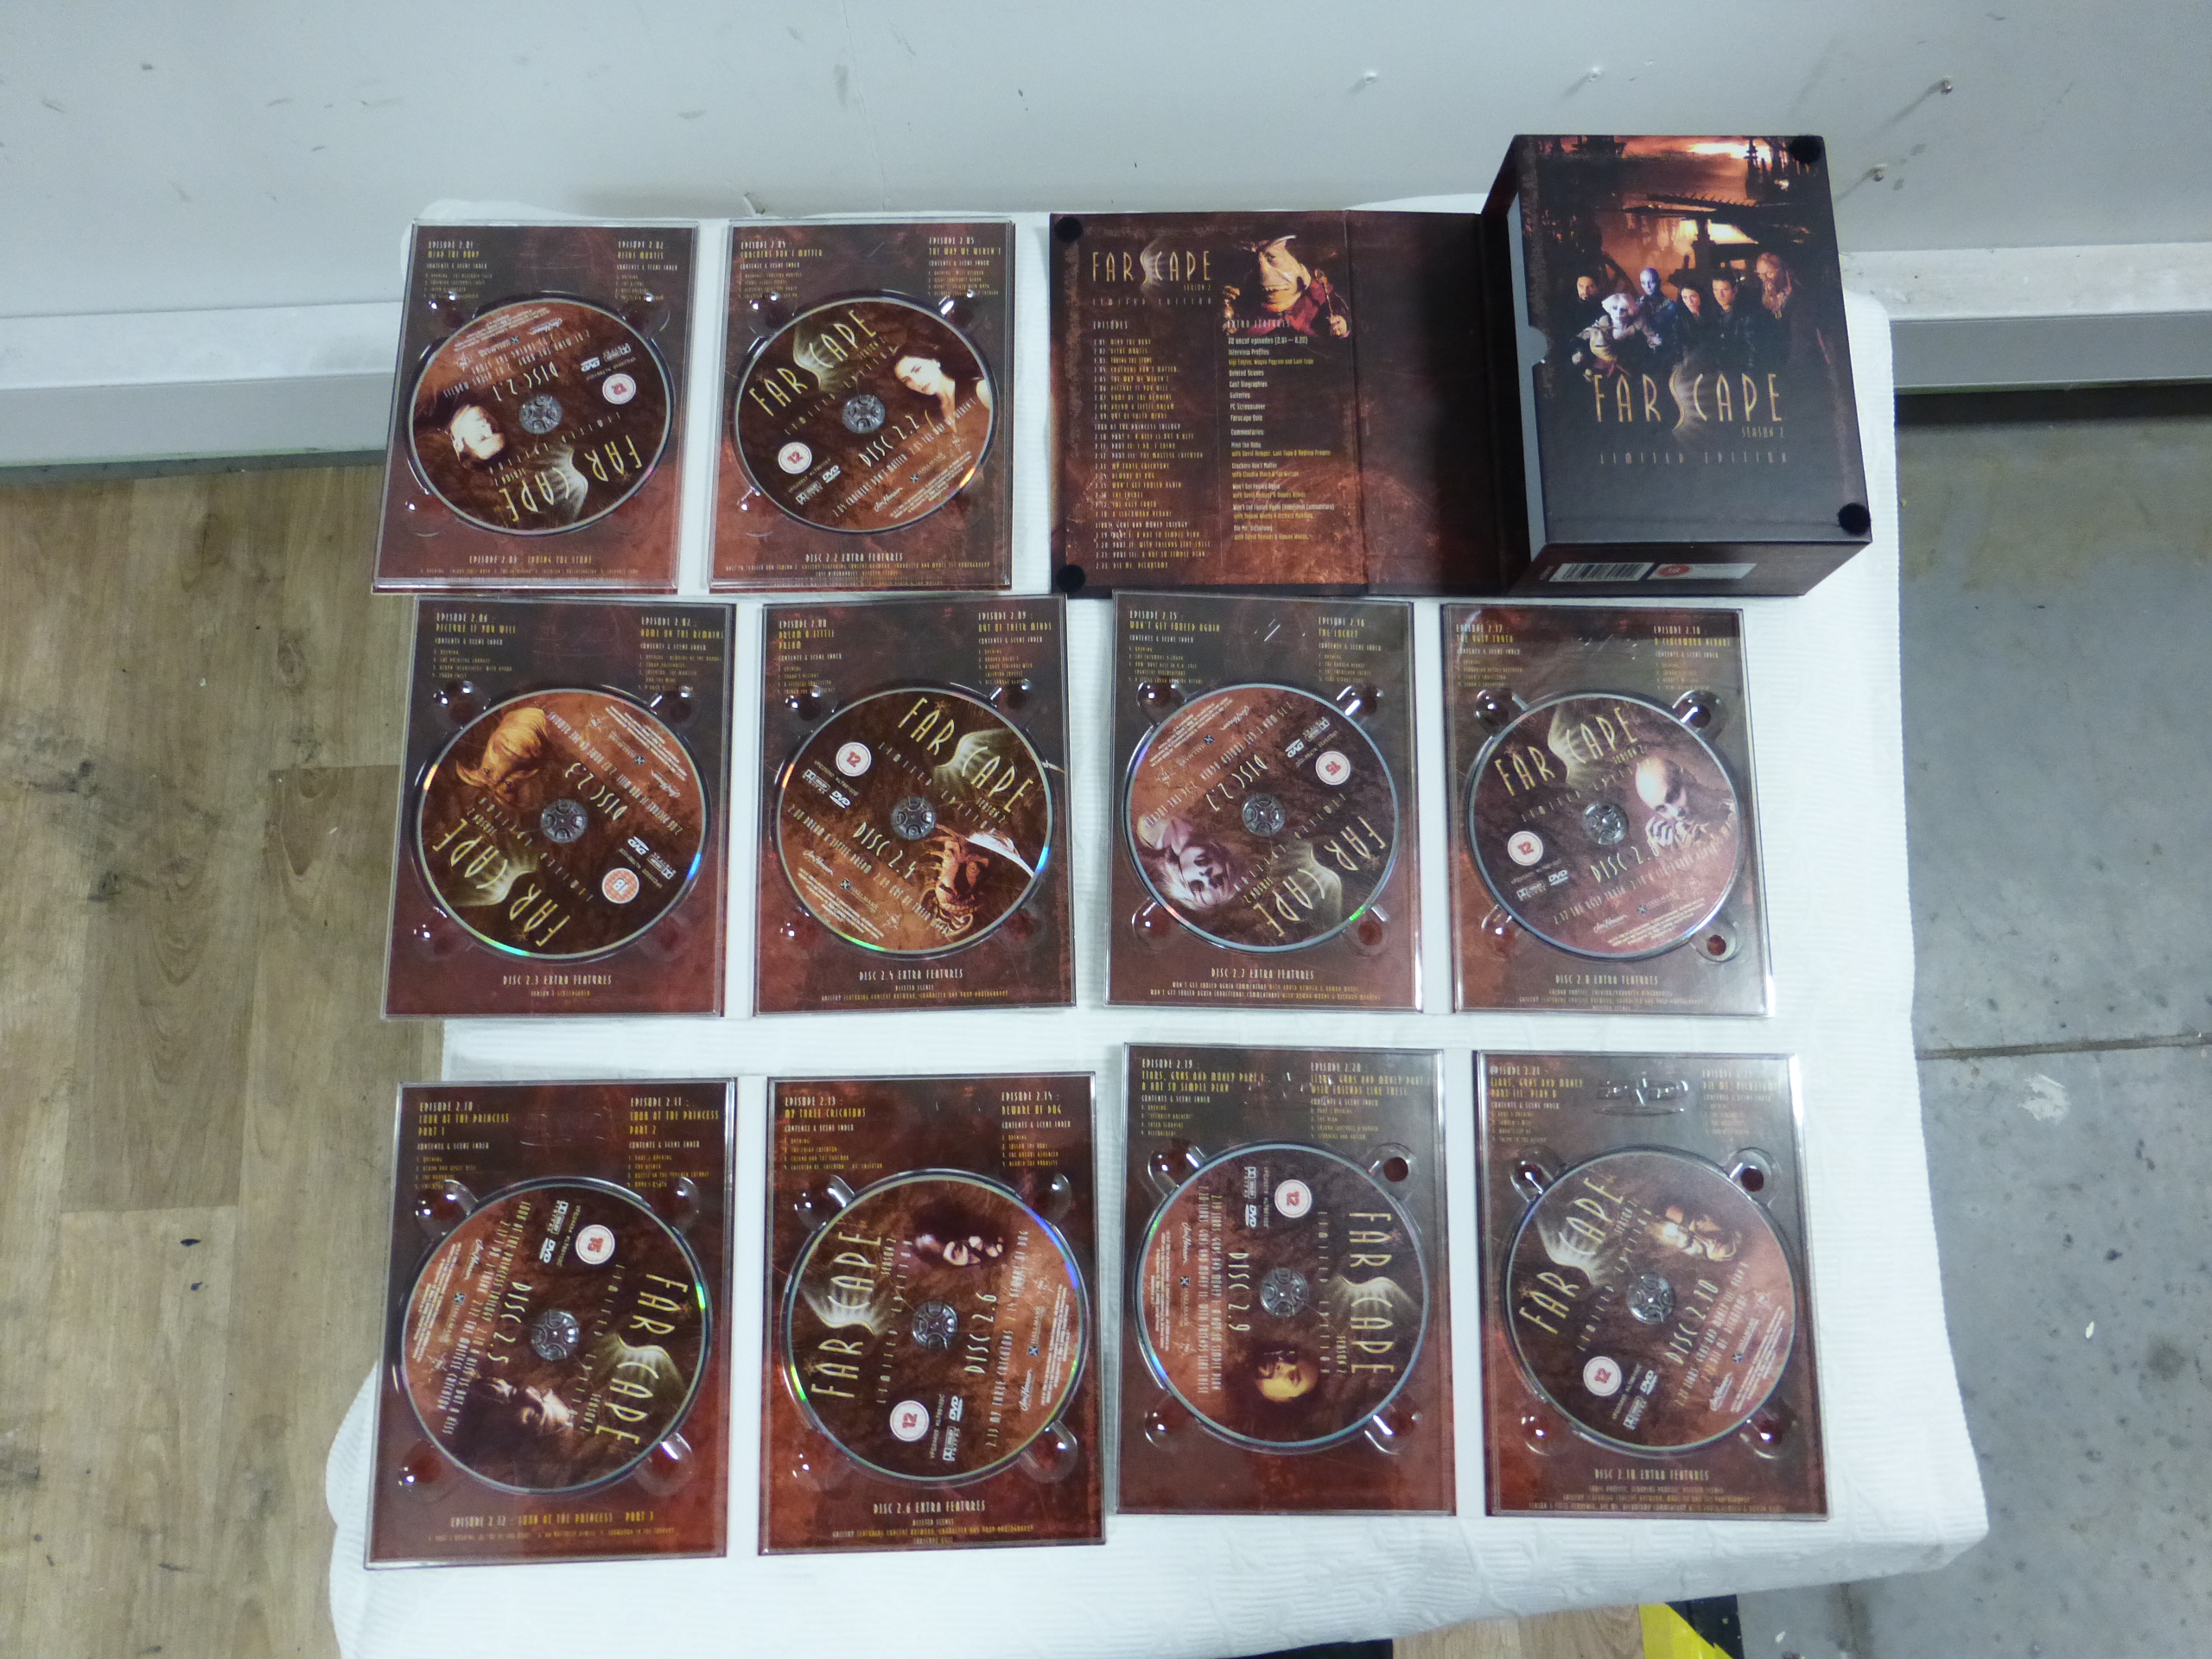 Farscape Season 2 DVD Boxset